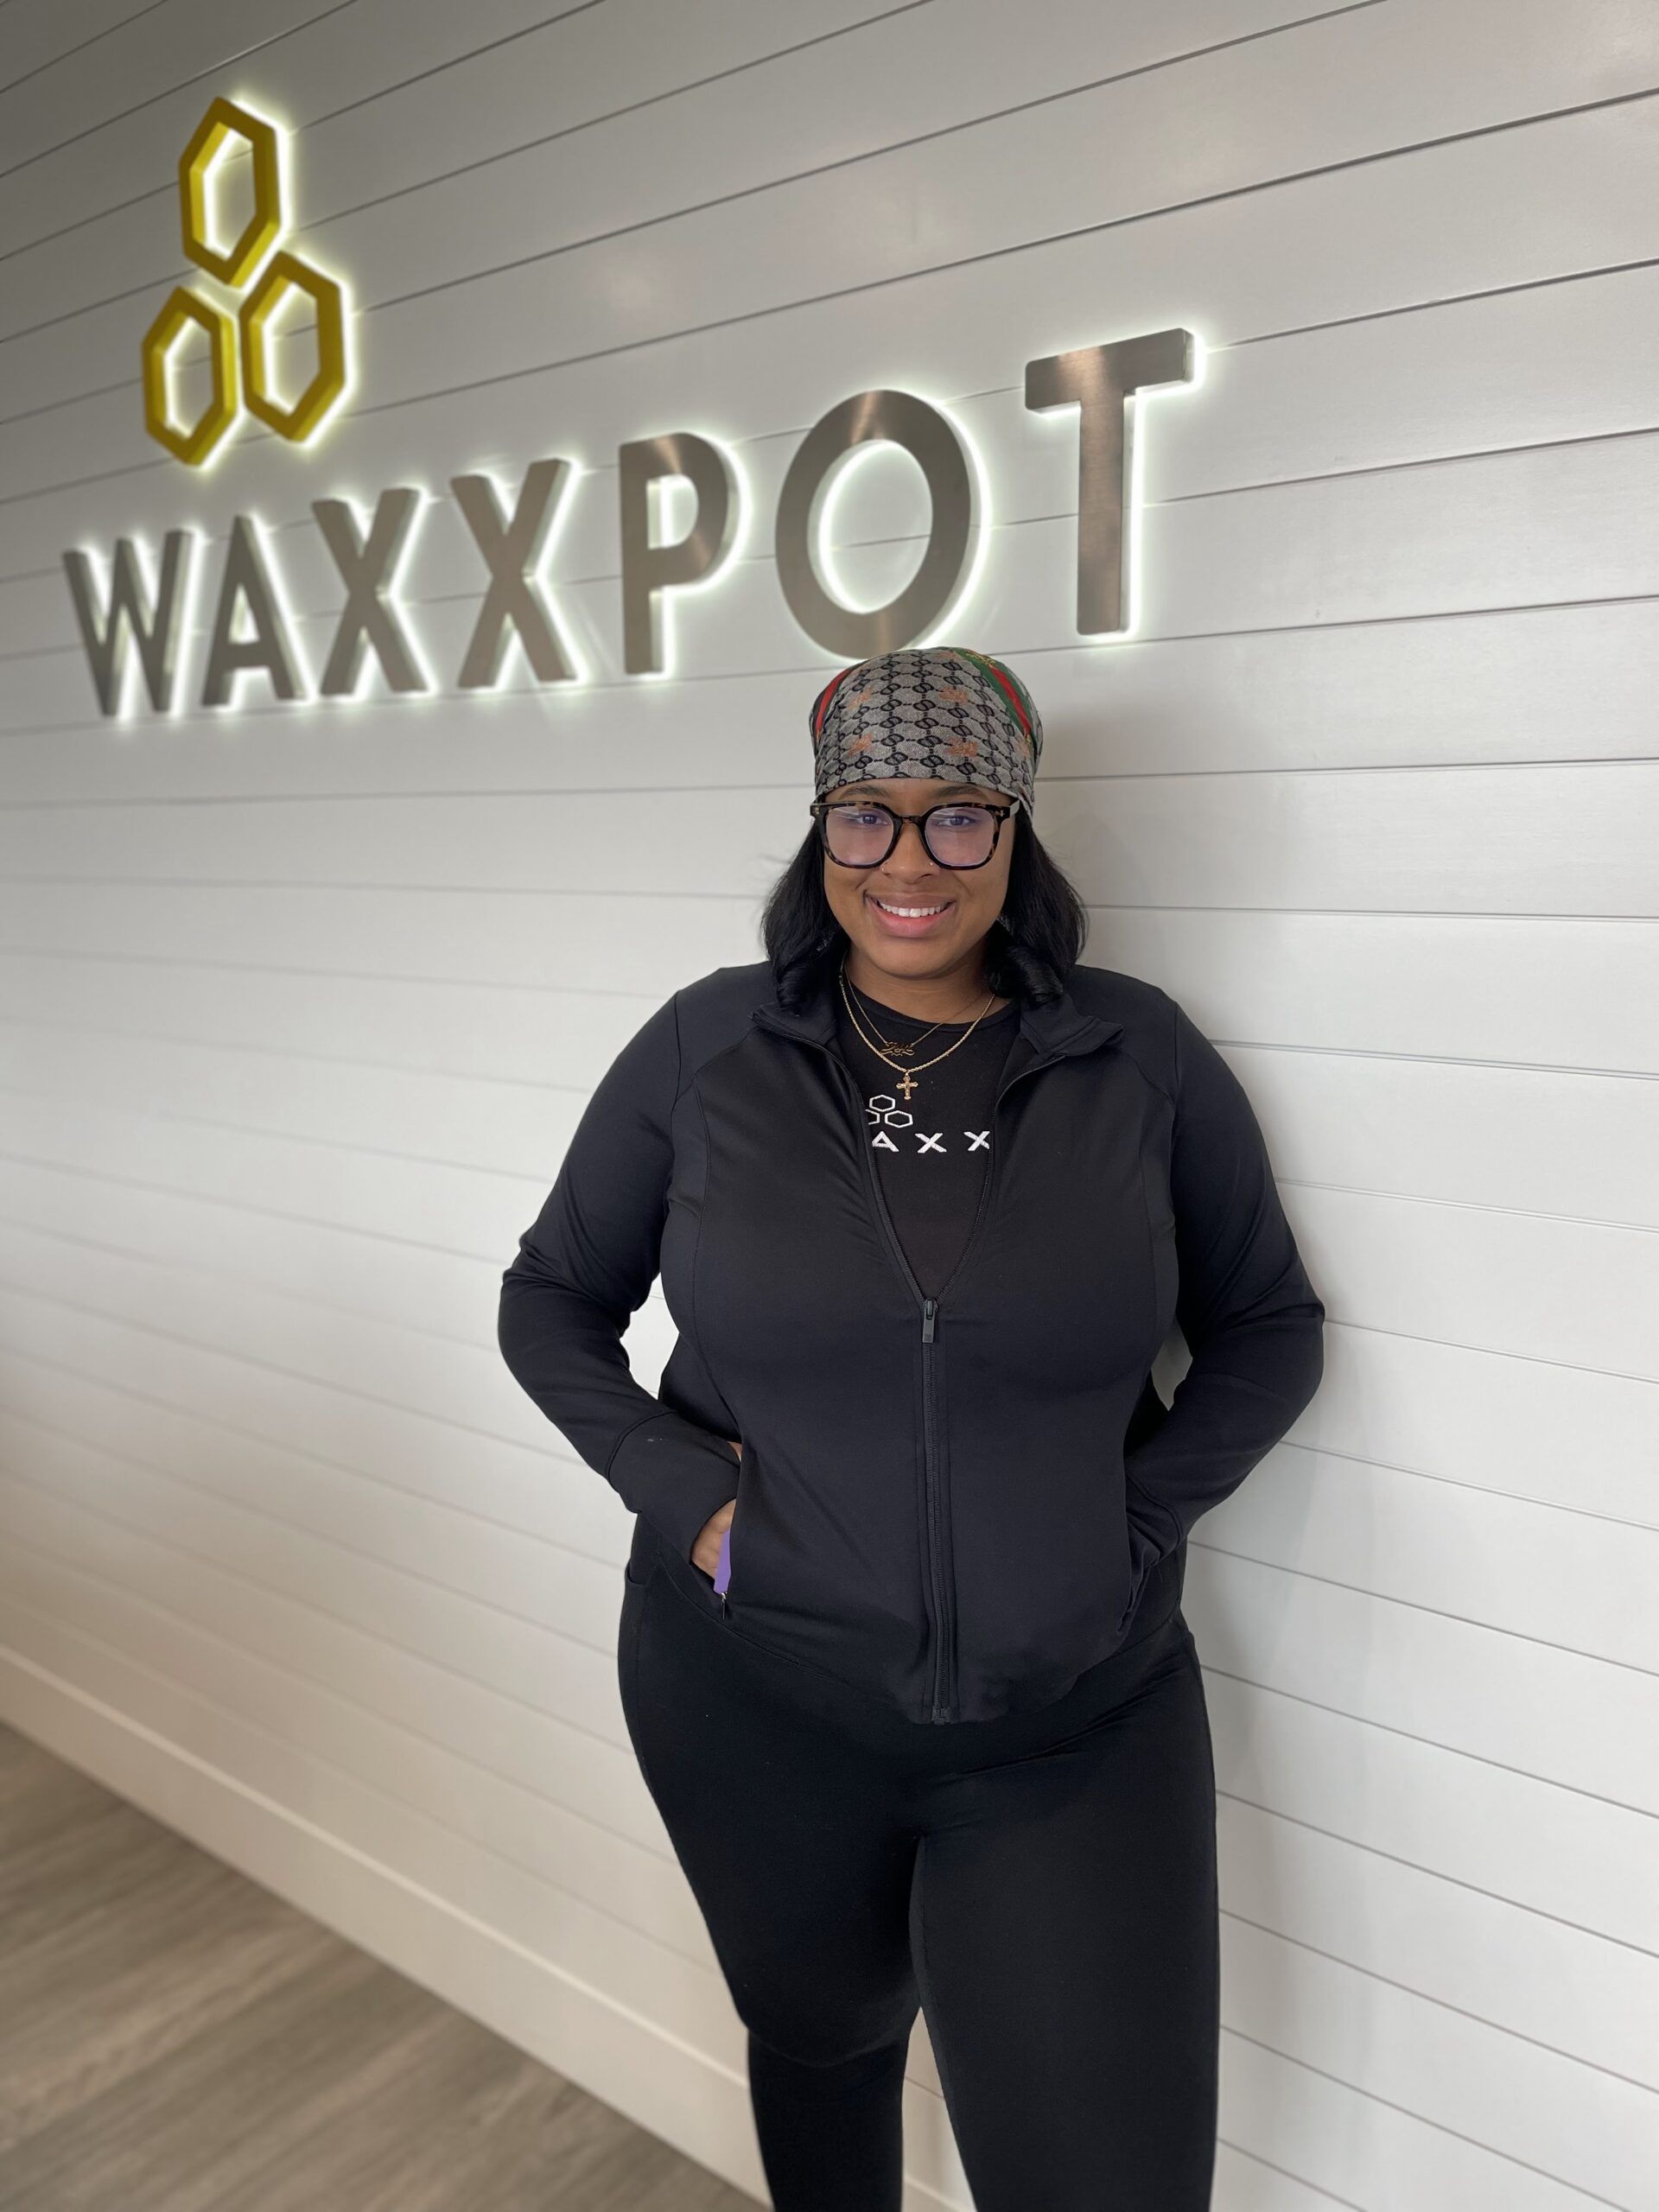 Waxxpot Waxx Specialist